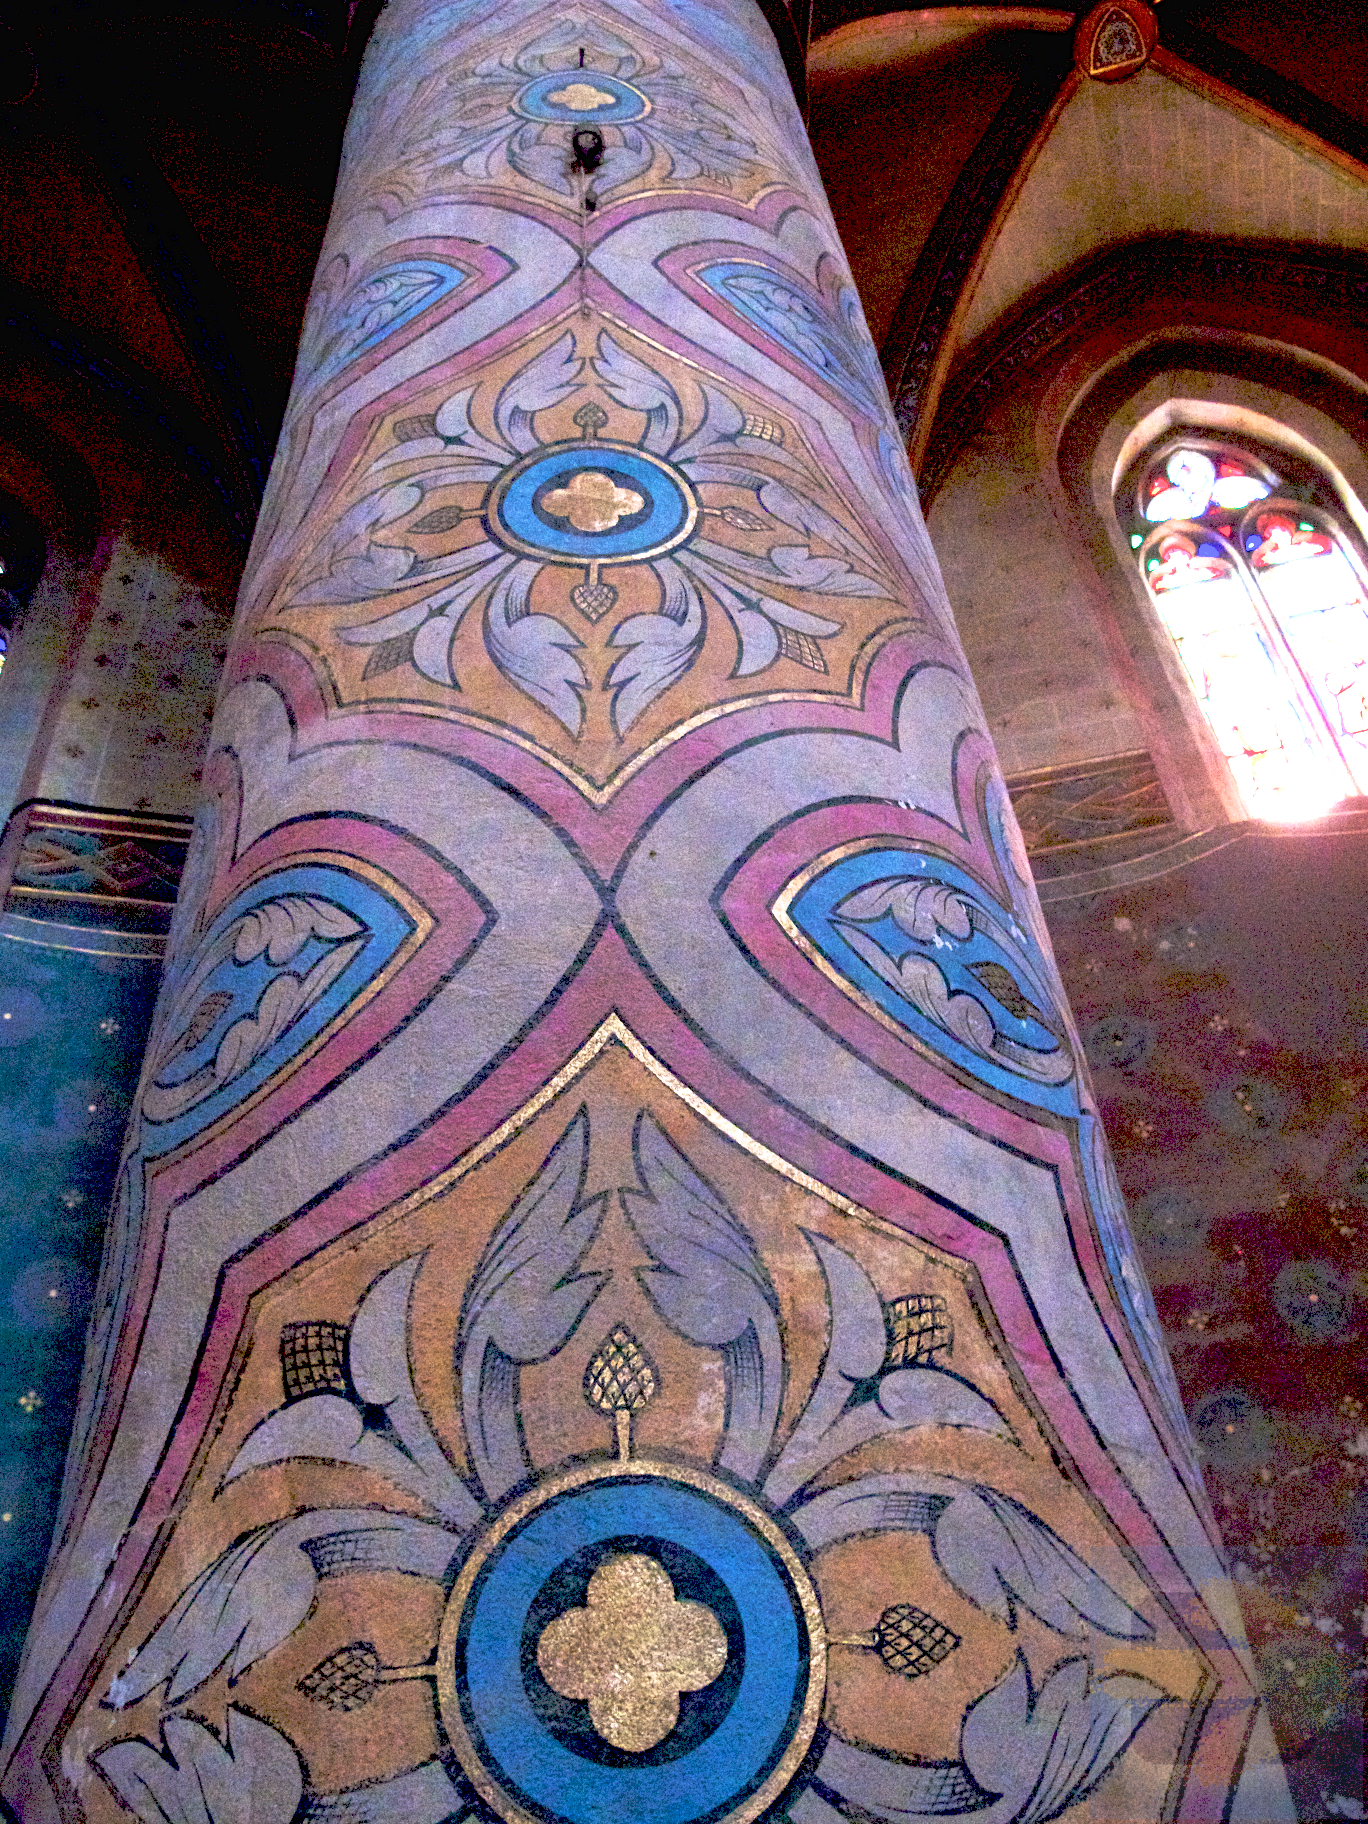 Decorated columns